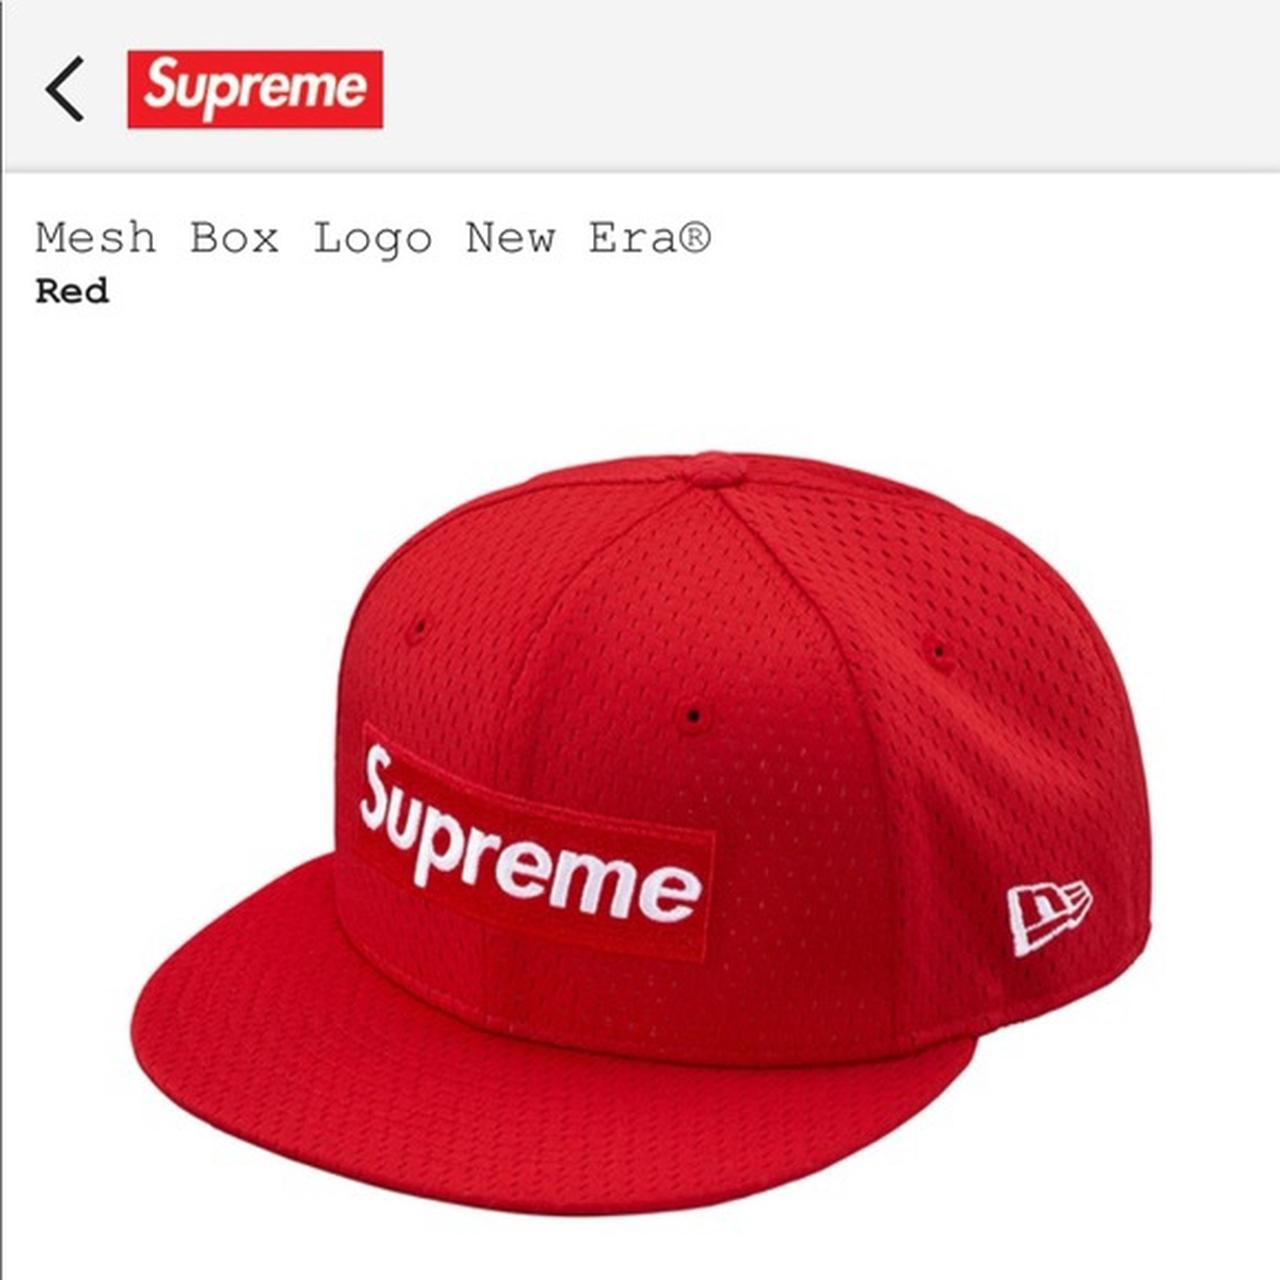 Supreme red mesh box logo New era hat Box Logo, - Depop